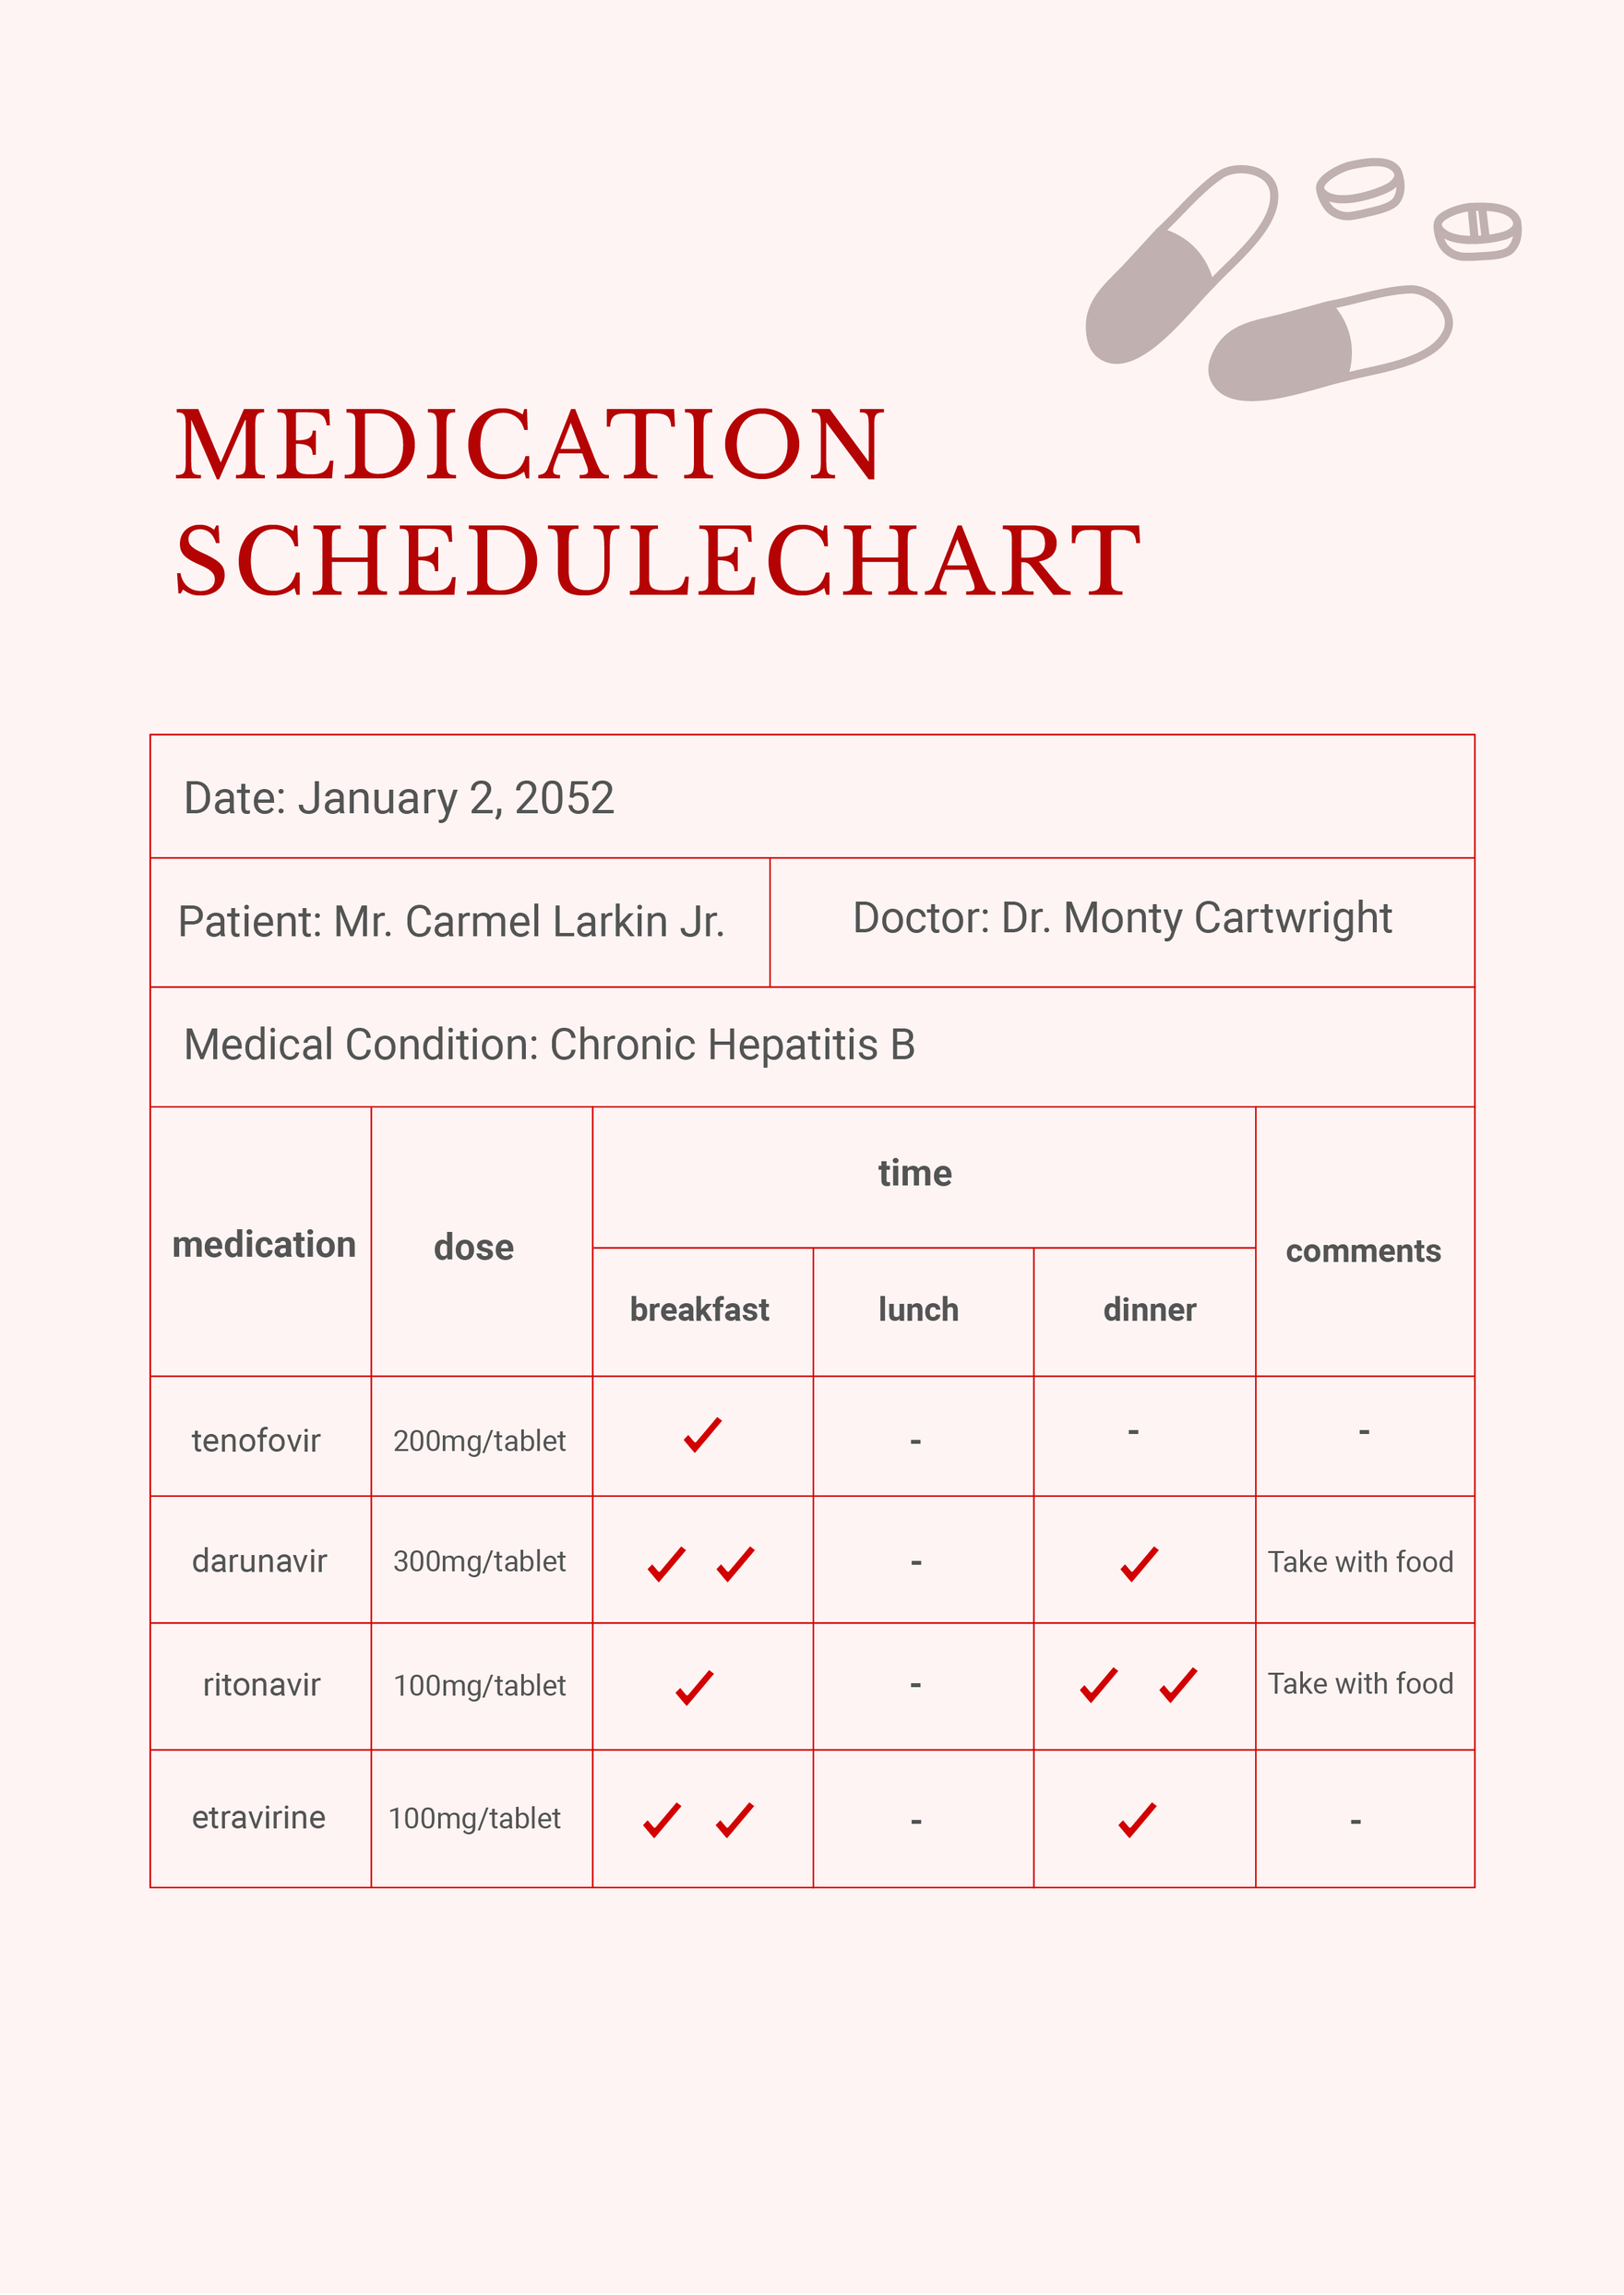 Medication Schedule Chart in PDF, Illustrator